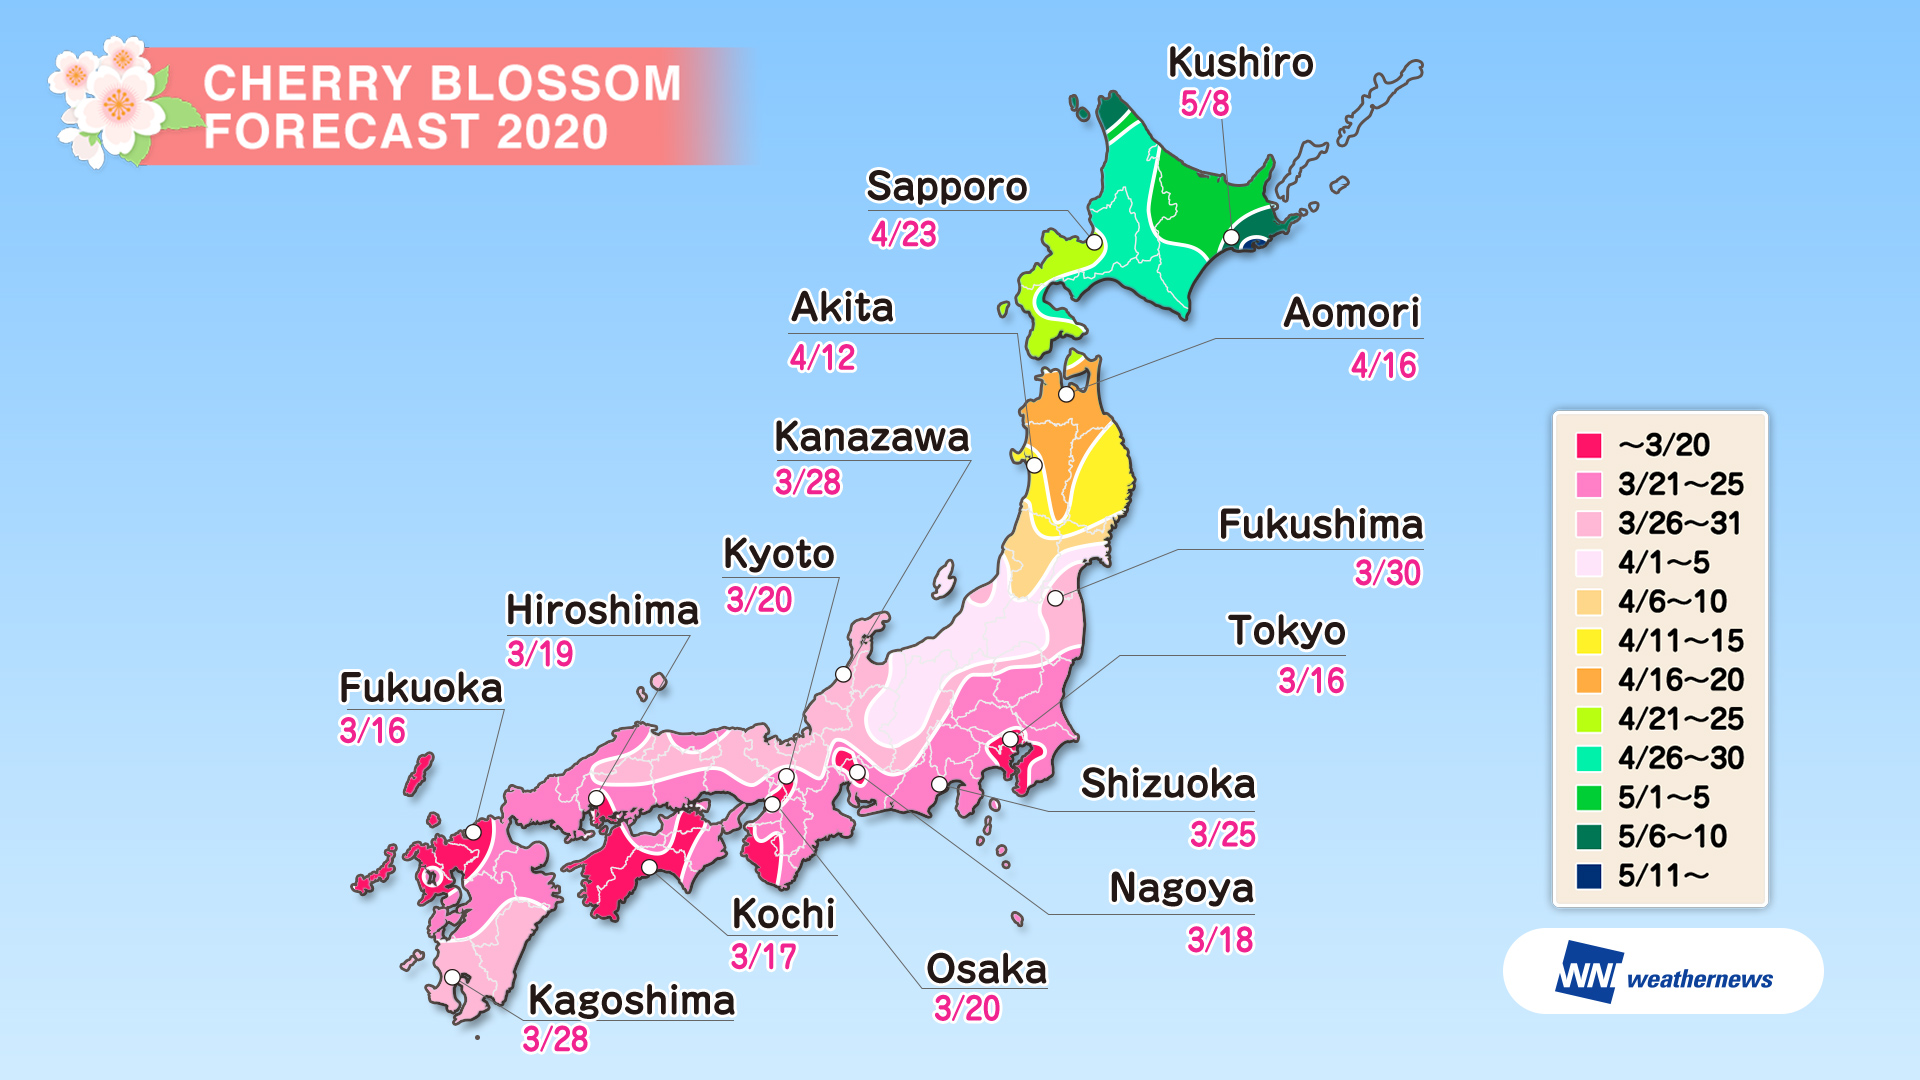 Japan Map Climate